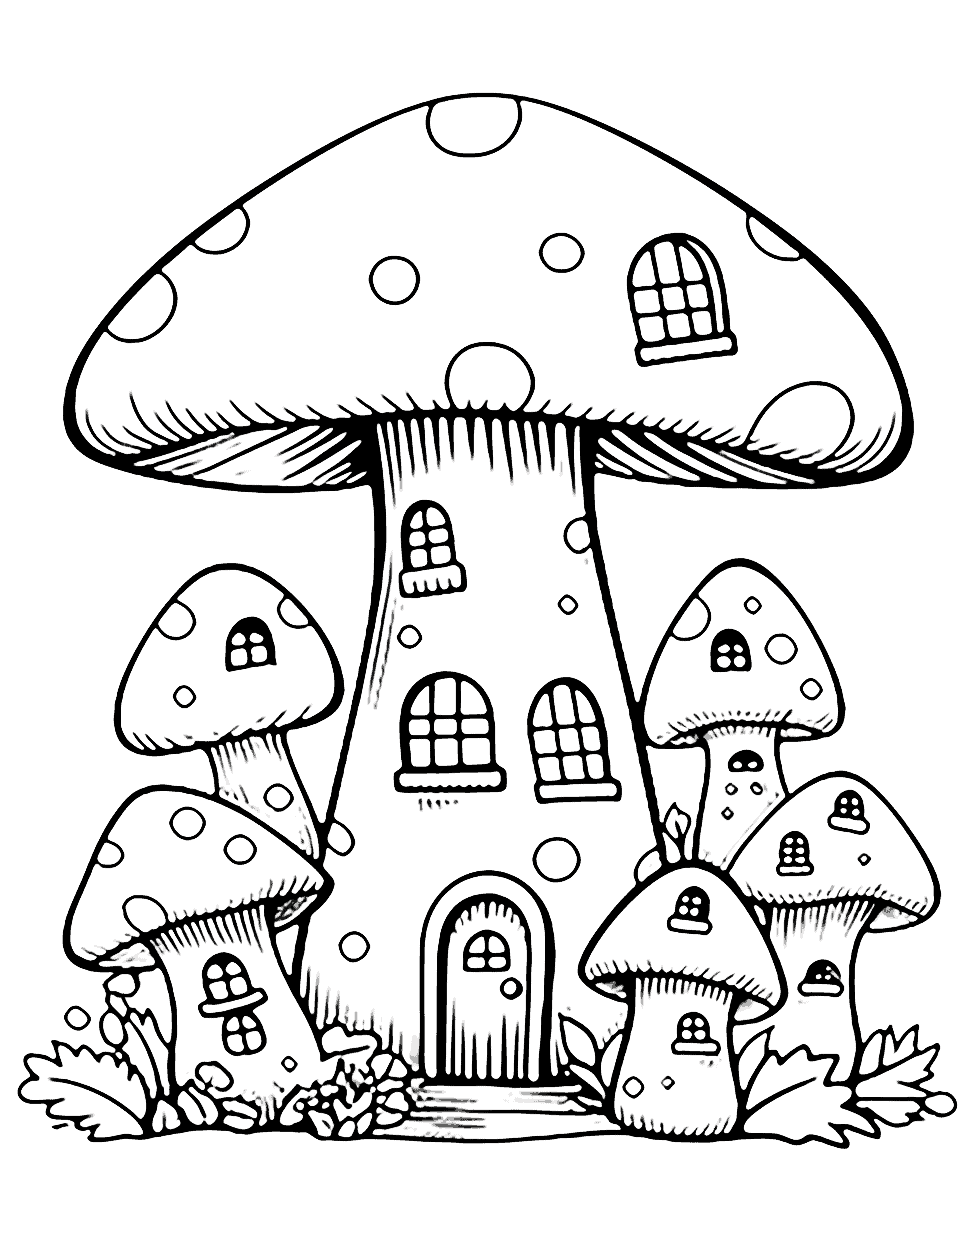 Kawaii Mushroom Village Cute Coloring Page - A village of cute mushrooms with doors and windows.